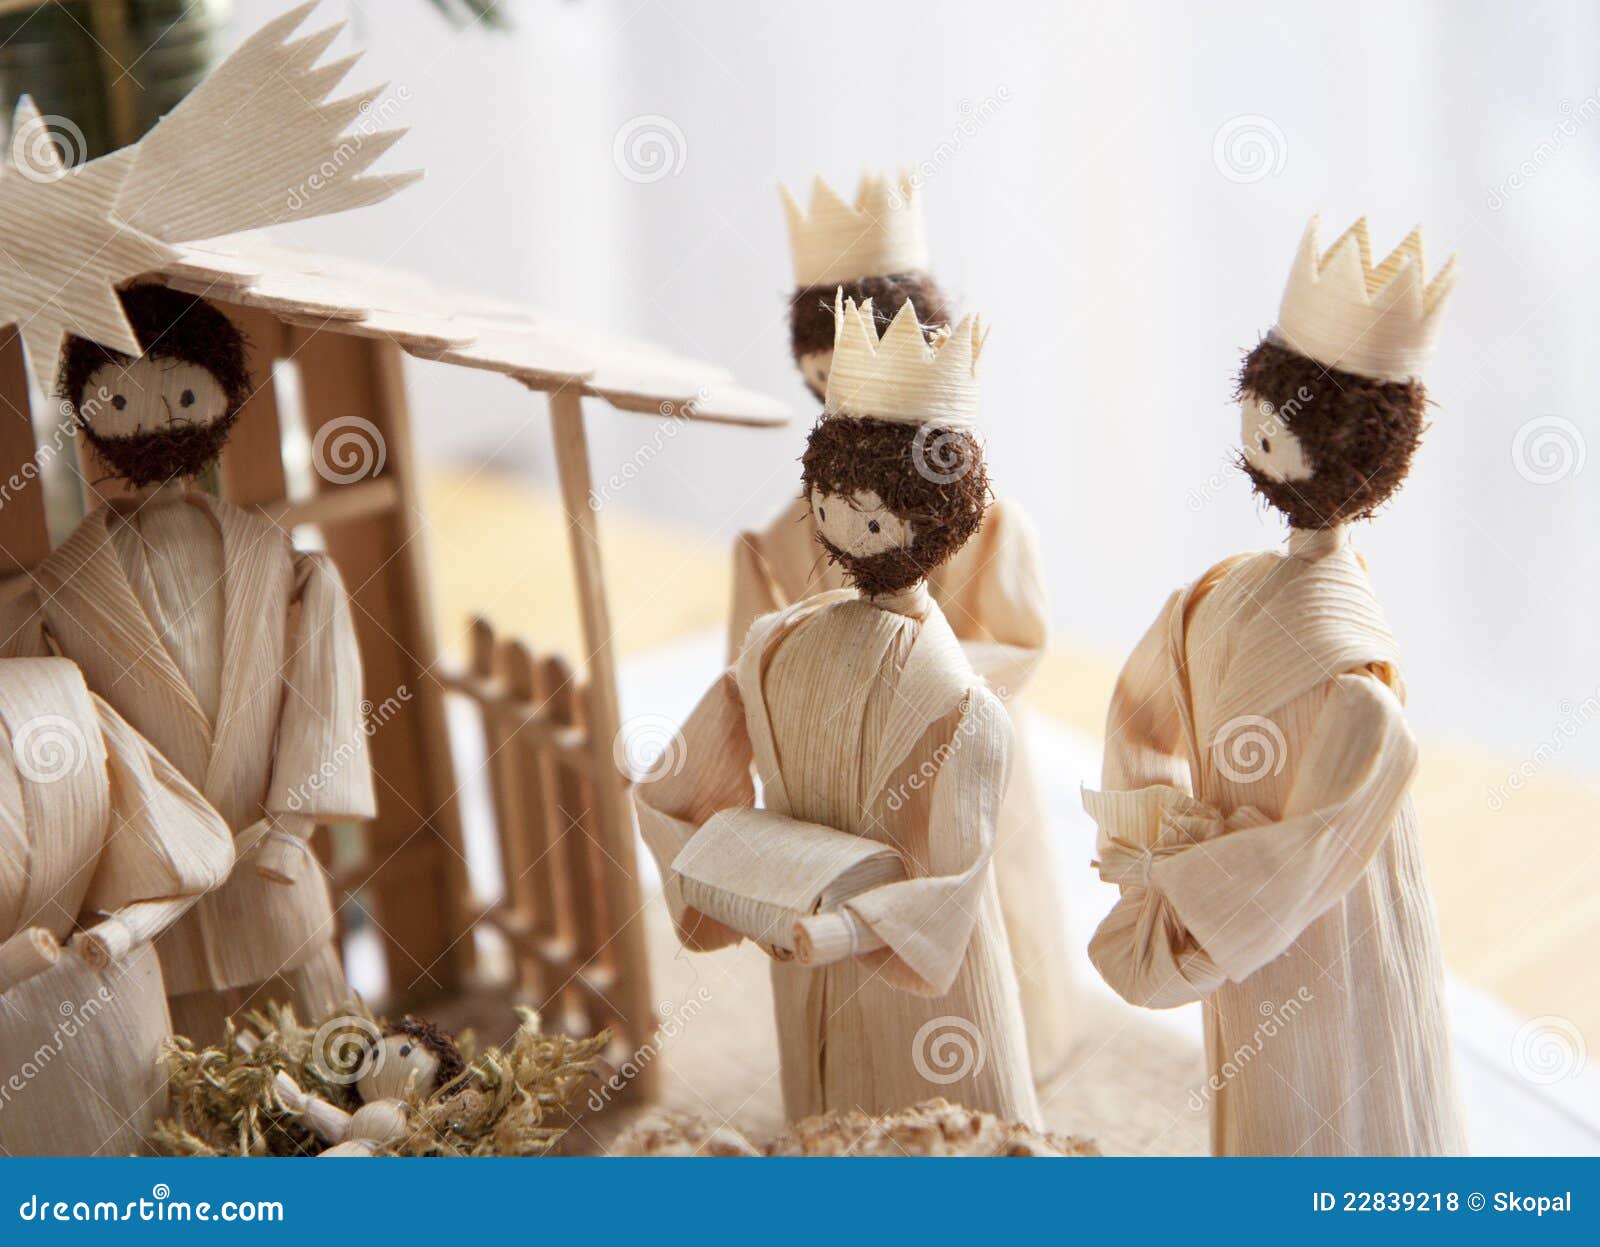 Three Wise Men Gifts to Baby Jesus